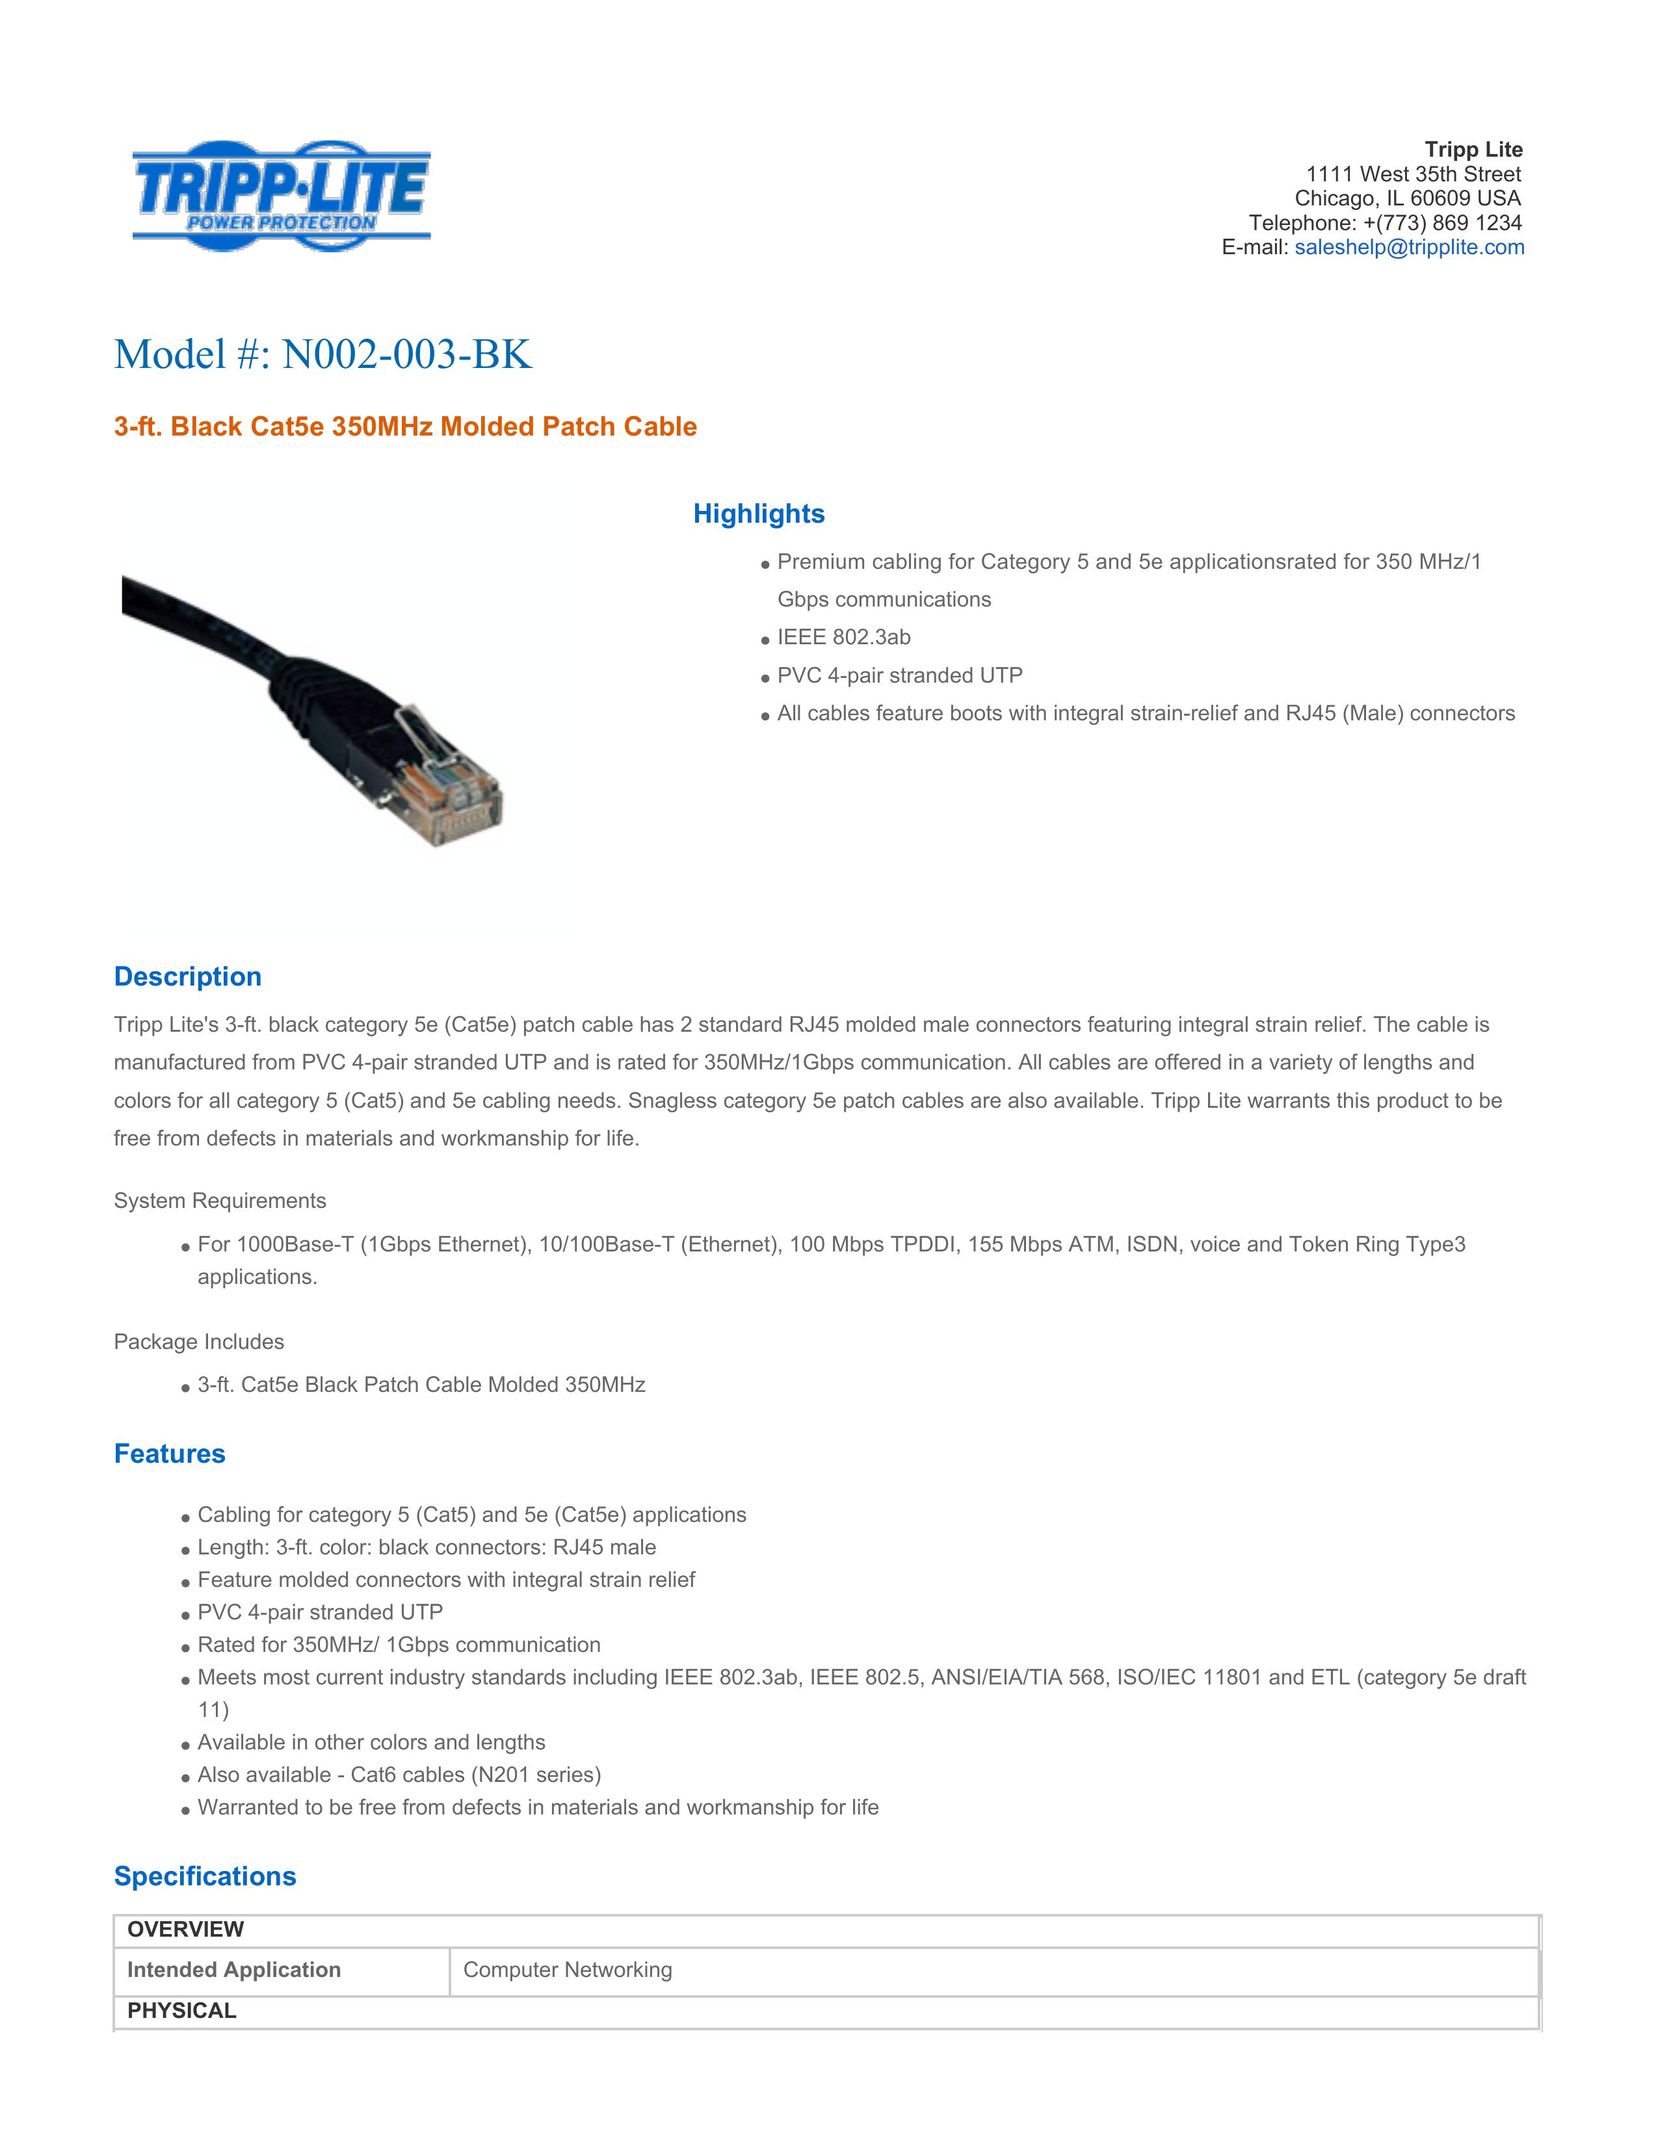 Tripp Lite N002-003-BK Network Cables User Manual